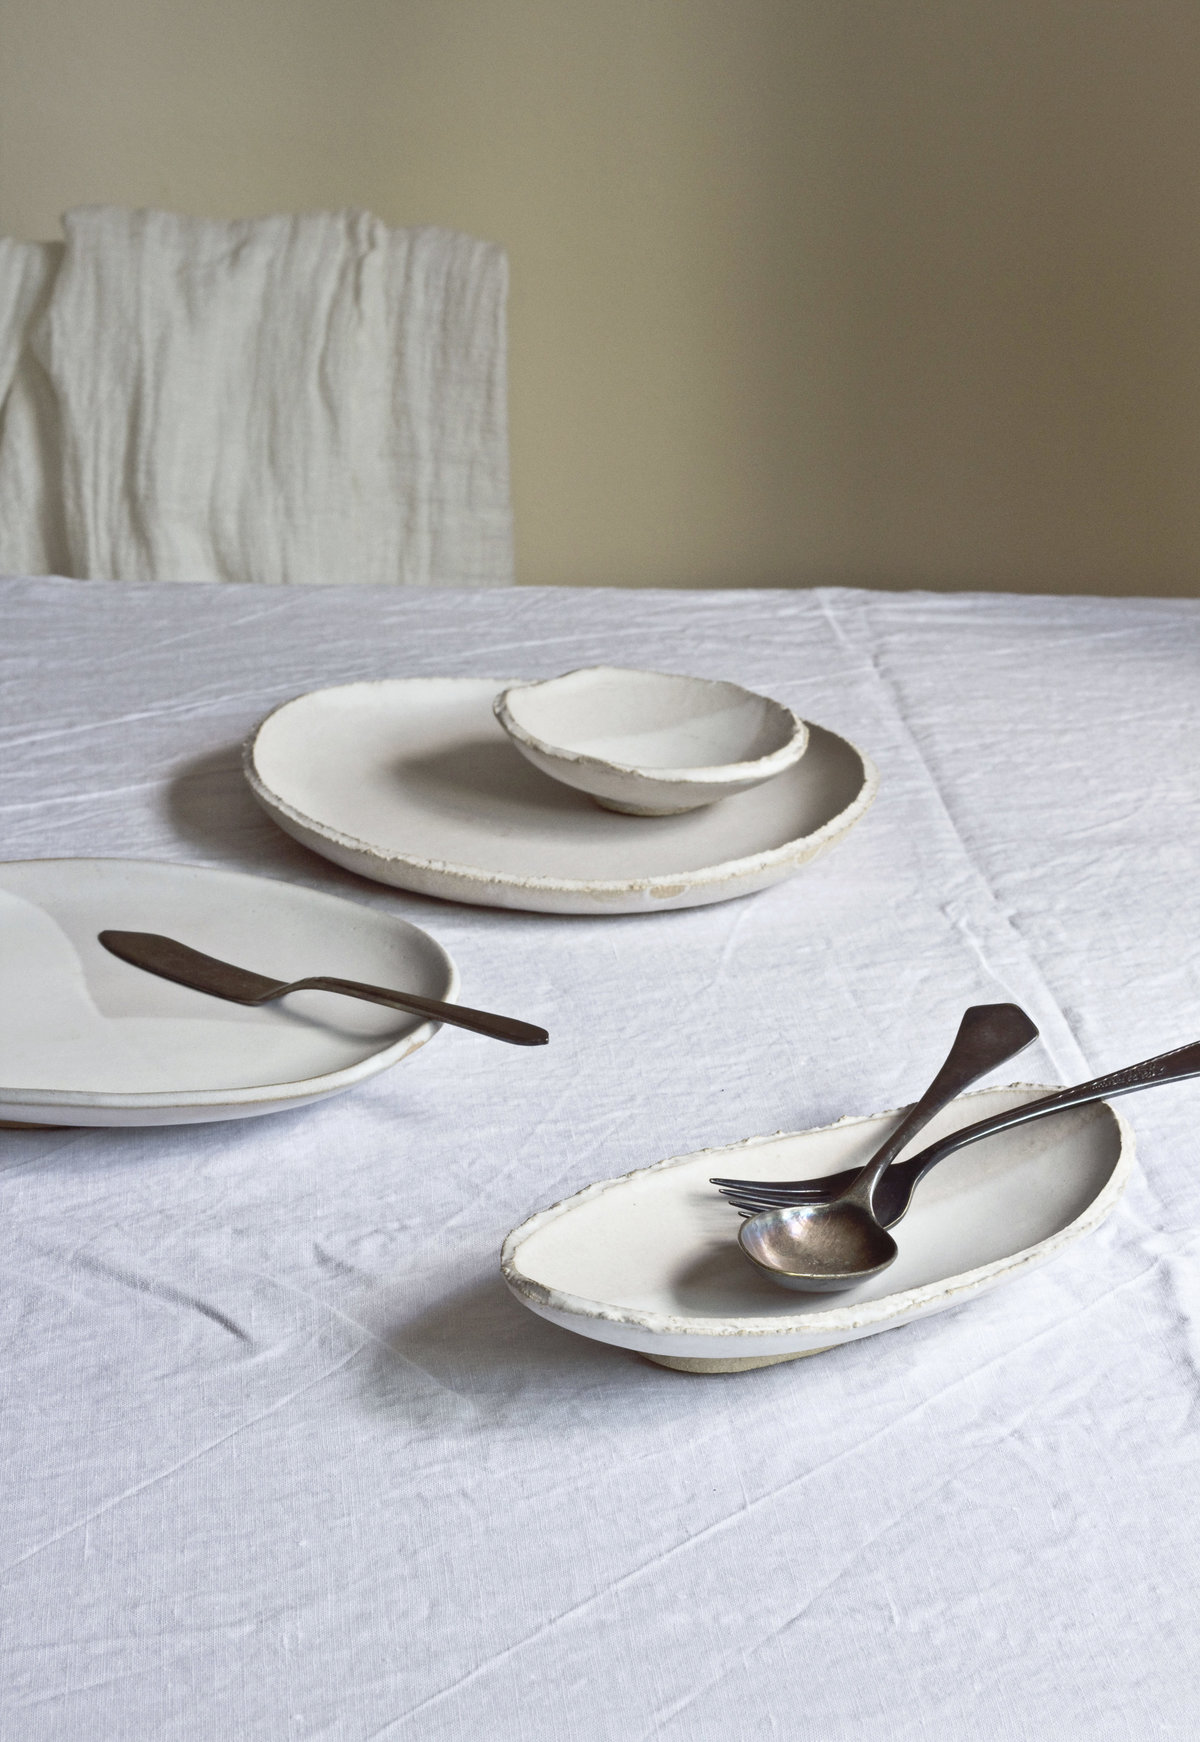 Yasha-Butler-Ceramic-Tablescape-Plate-Bowl-White-08-2018-5048-3500px